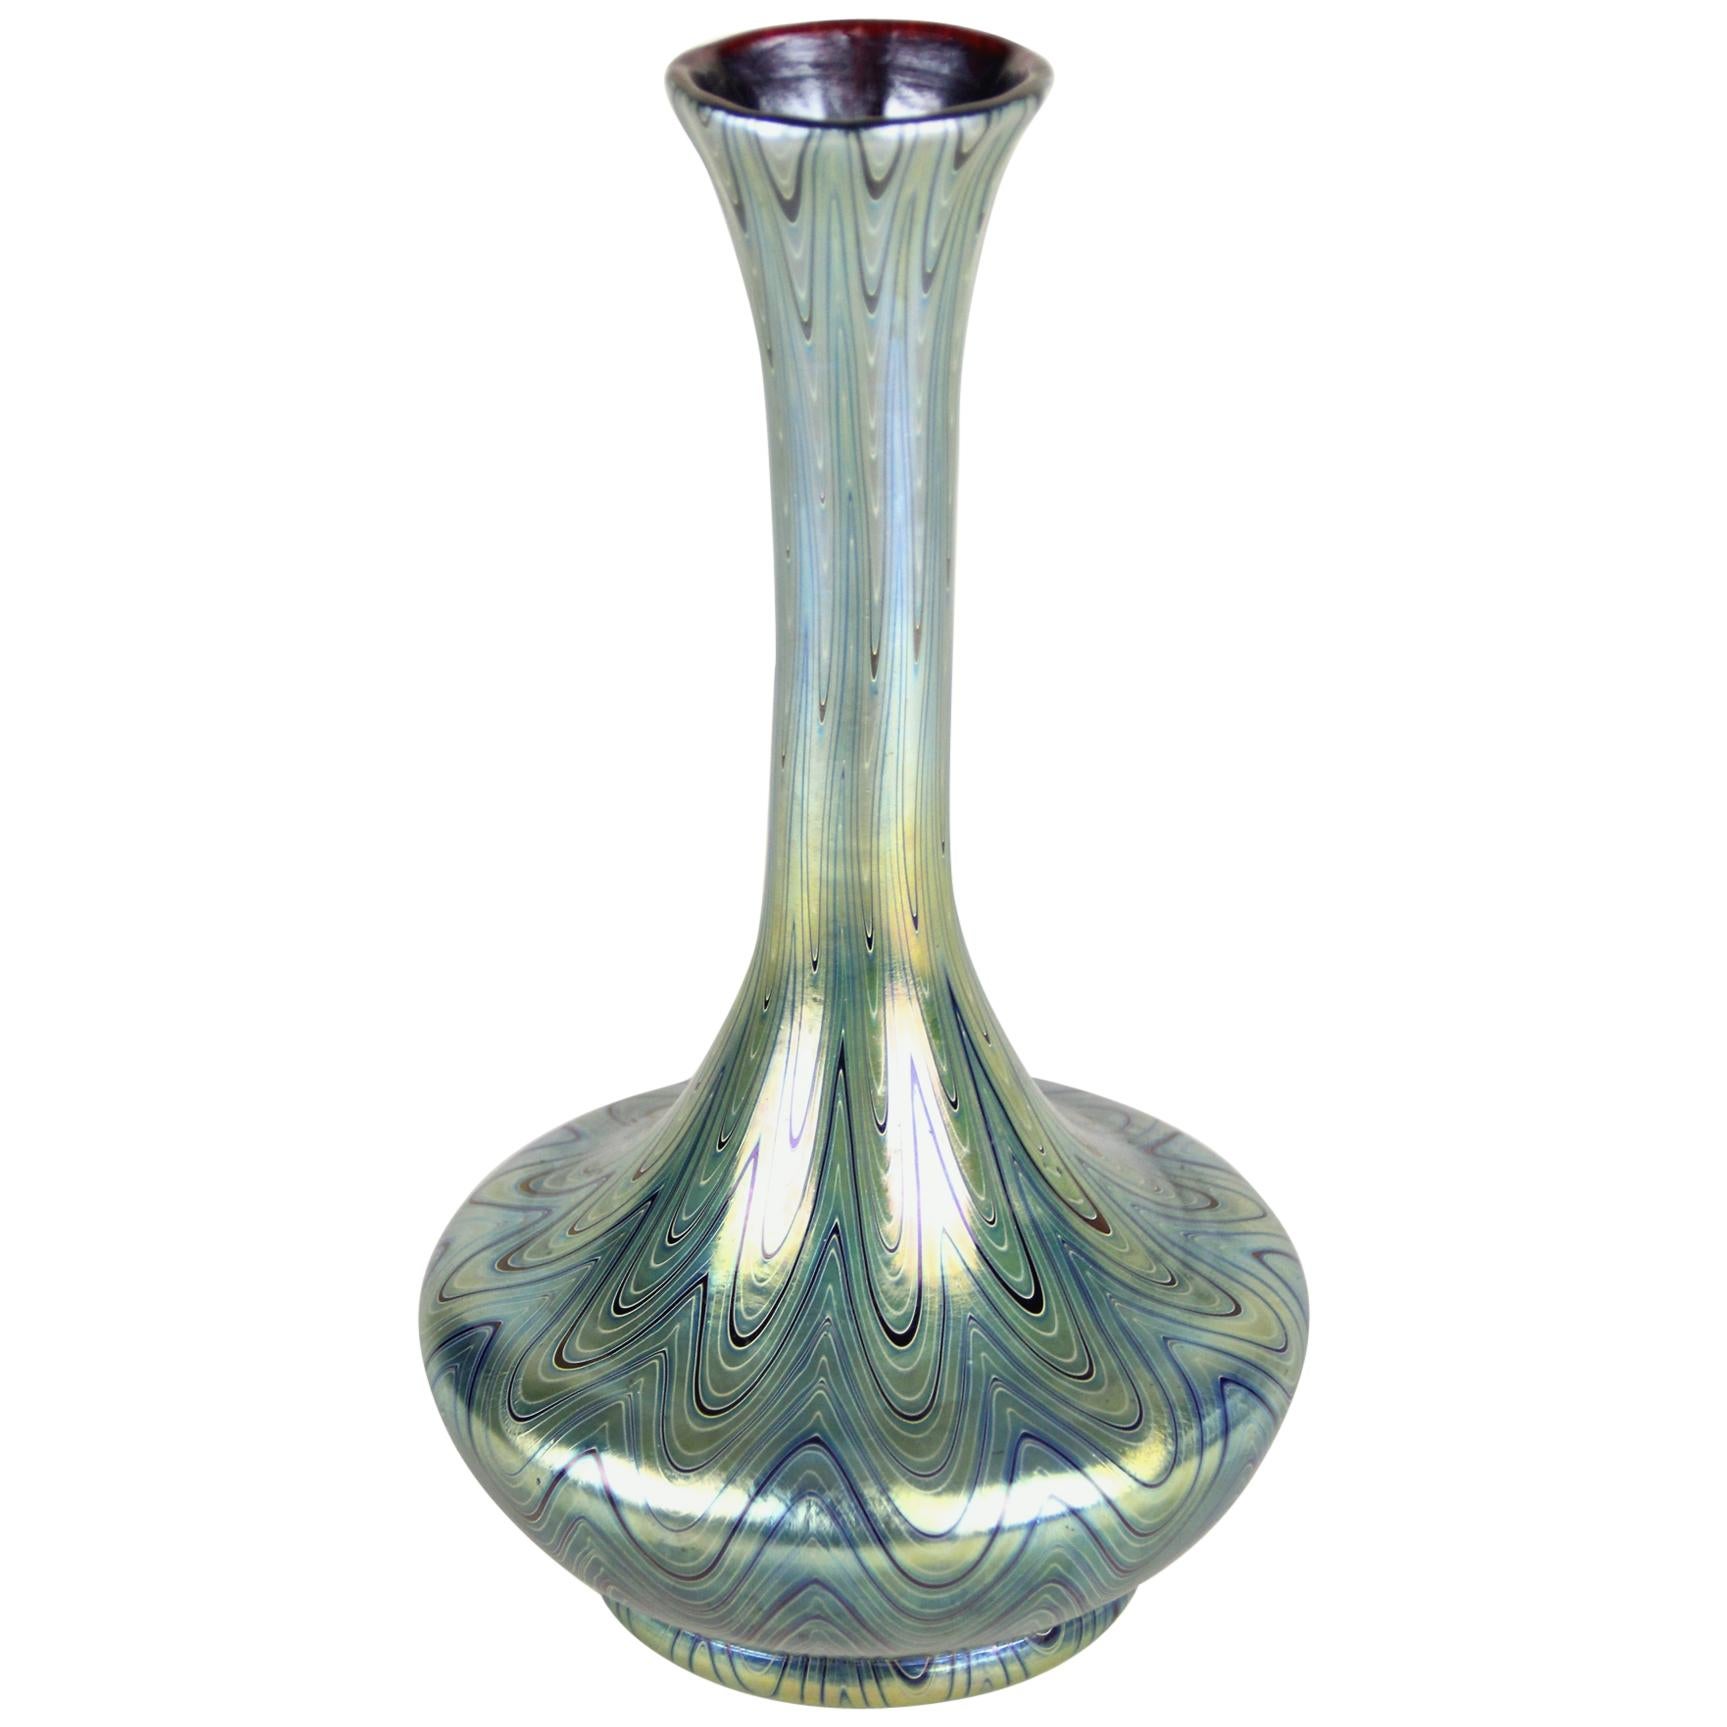 Loetz Witwe Glass Vase Rubin Phänomen Genre 6893 Iriscident, Bohemia, circa 1899